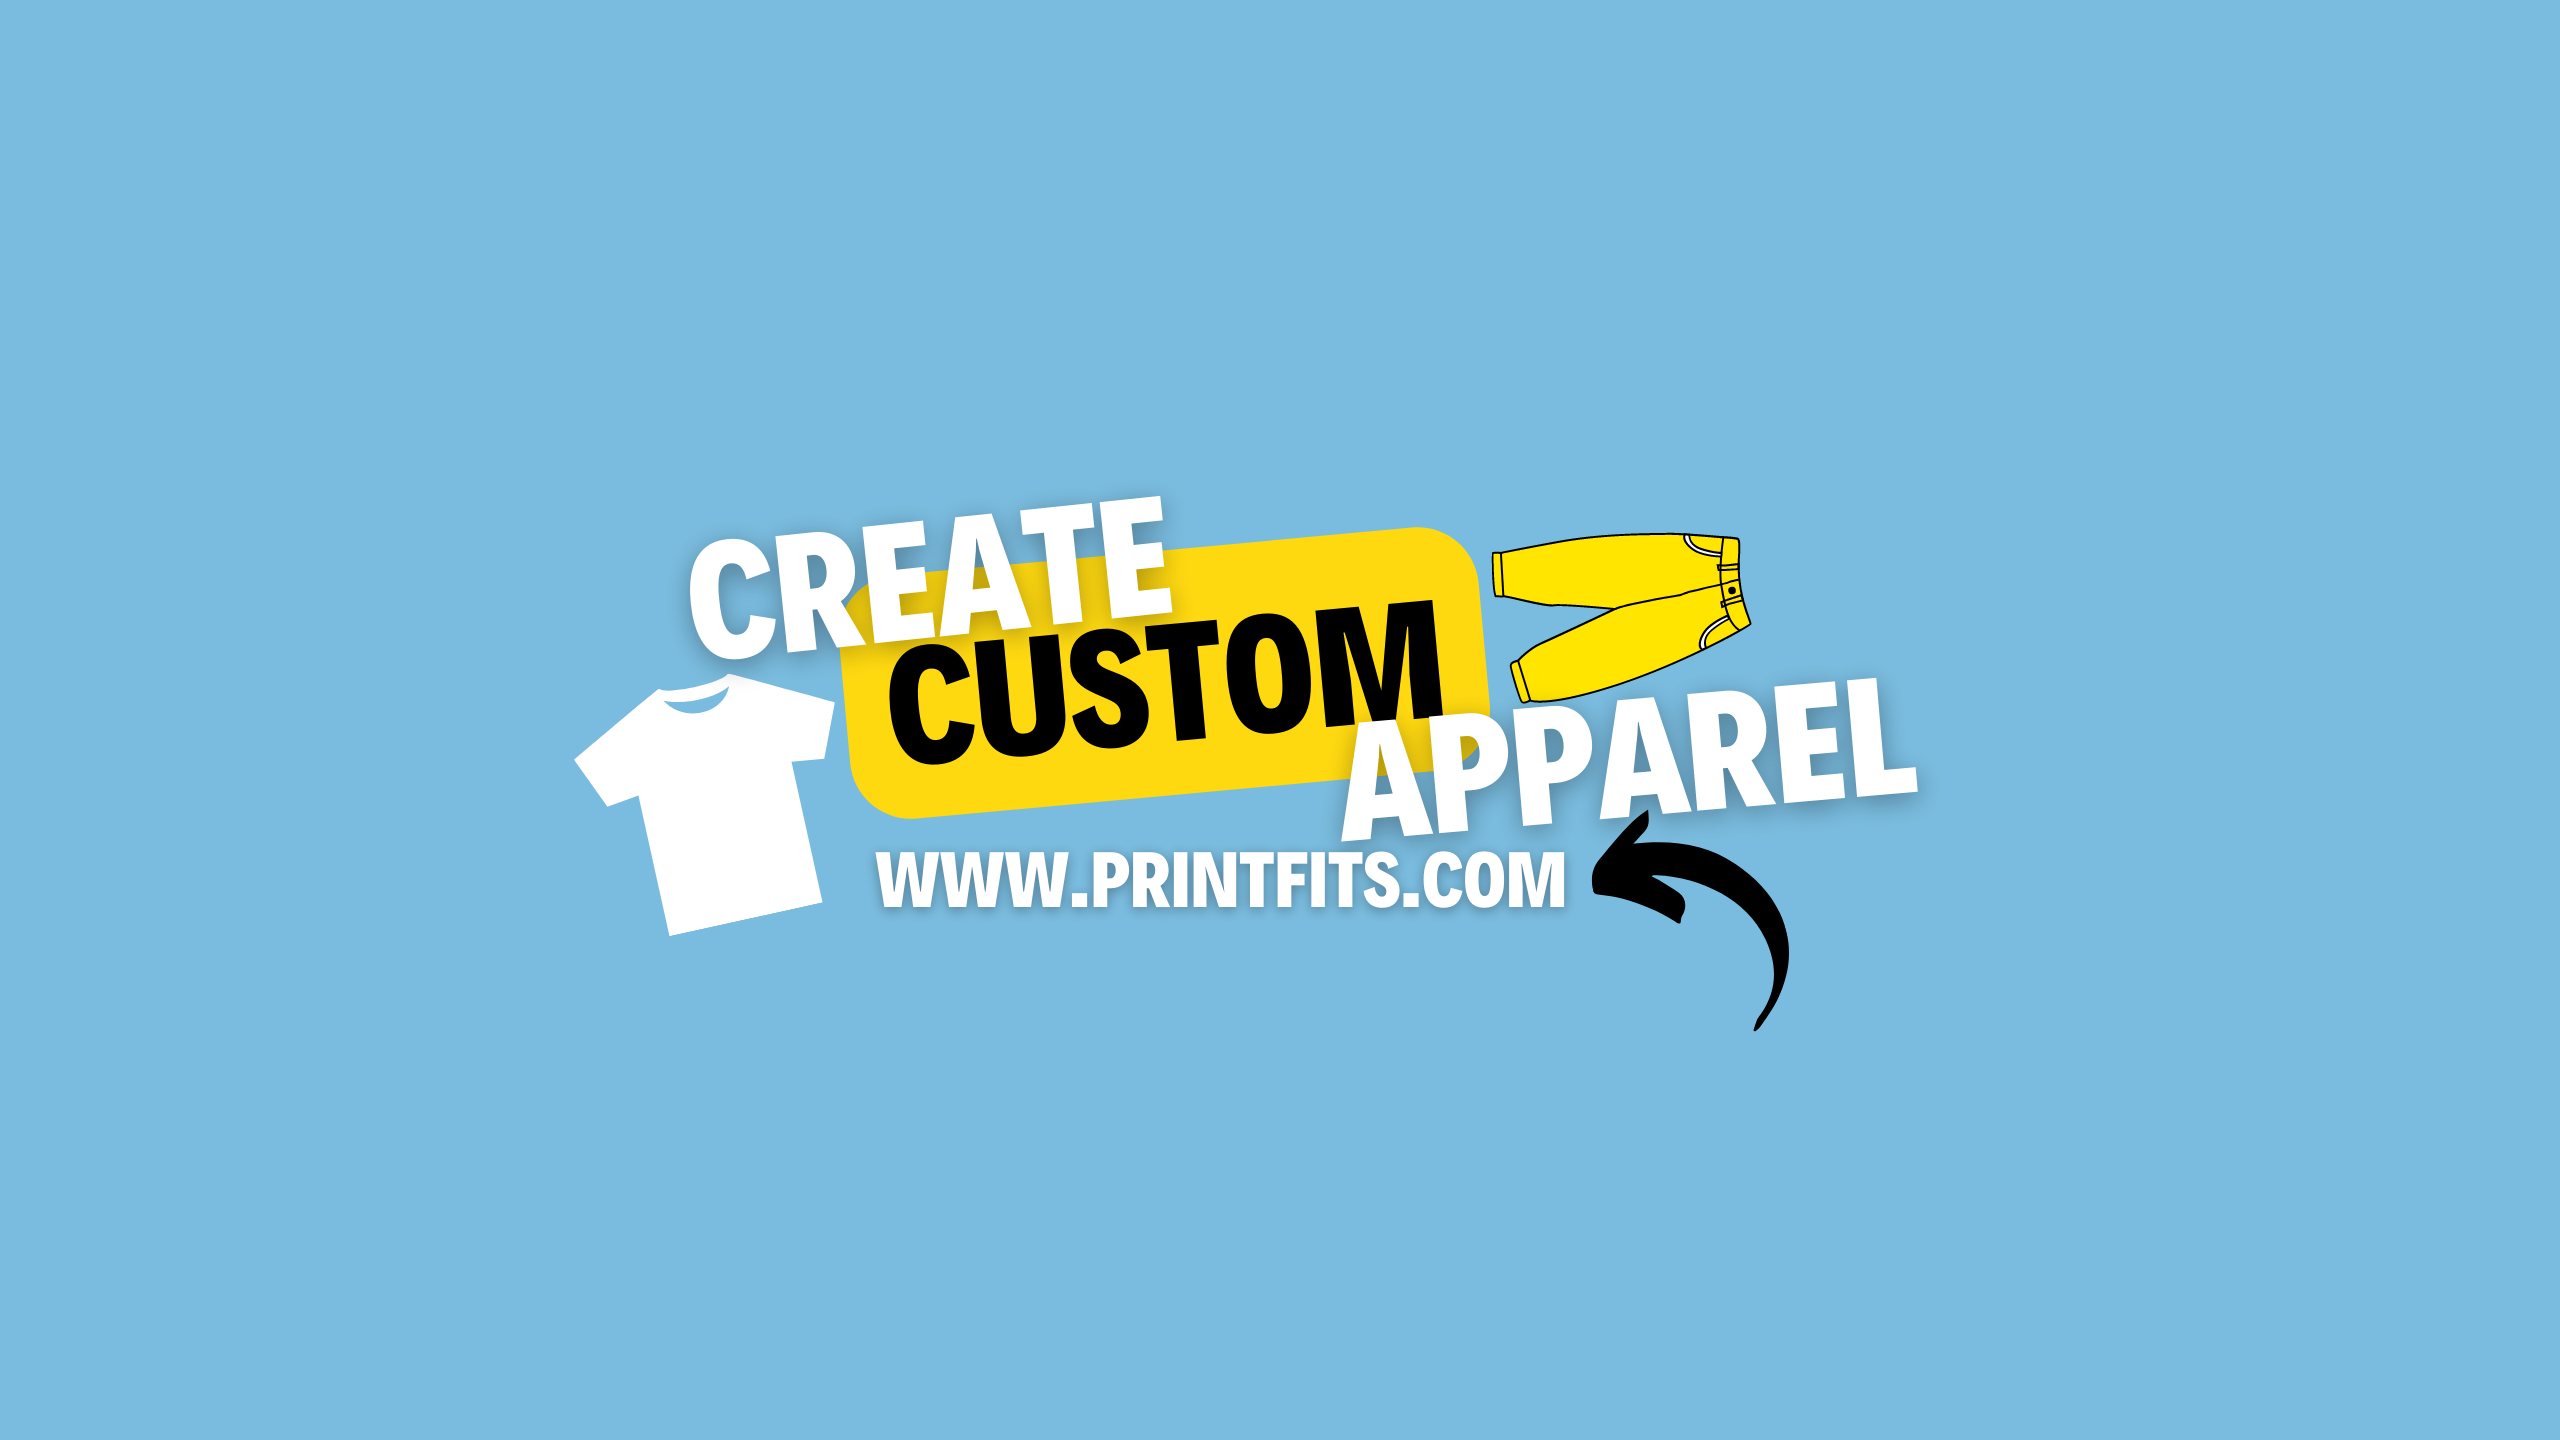 Printfits Revolutionizes Custom T-Shirt Printing with State-of-the-Art Digital Platform